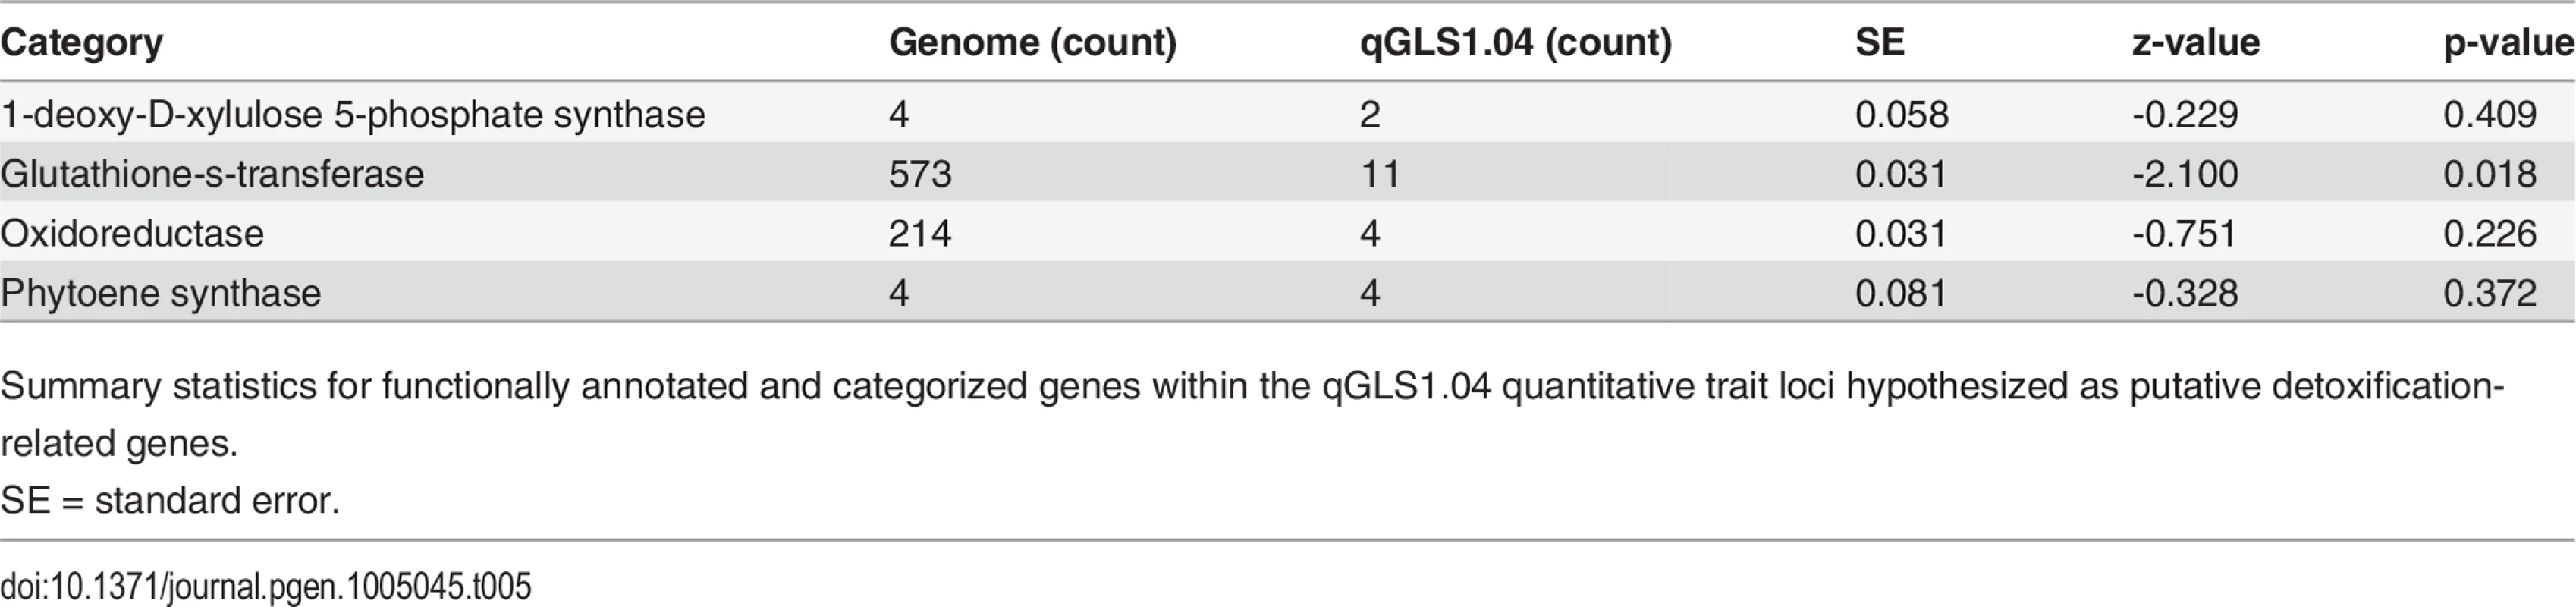 Summary statistics for detoxification-related genes underlying qGLS1.04.